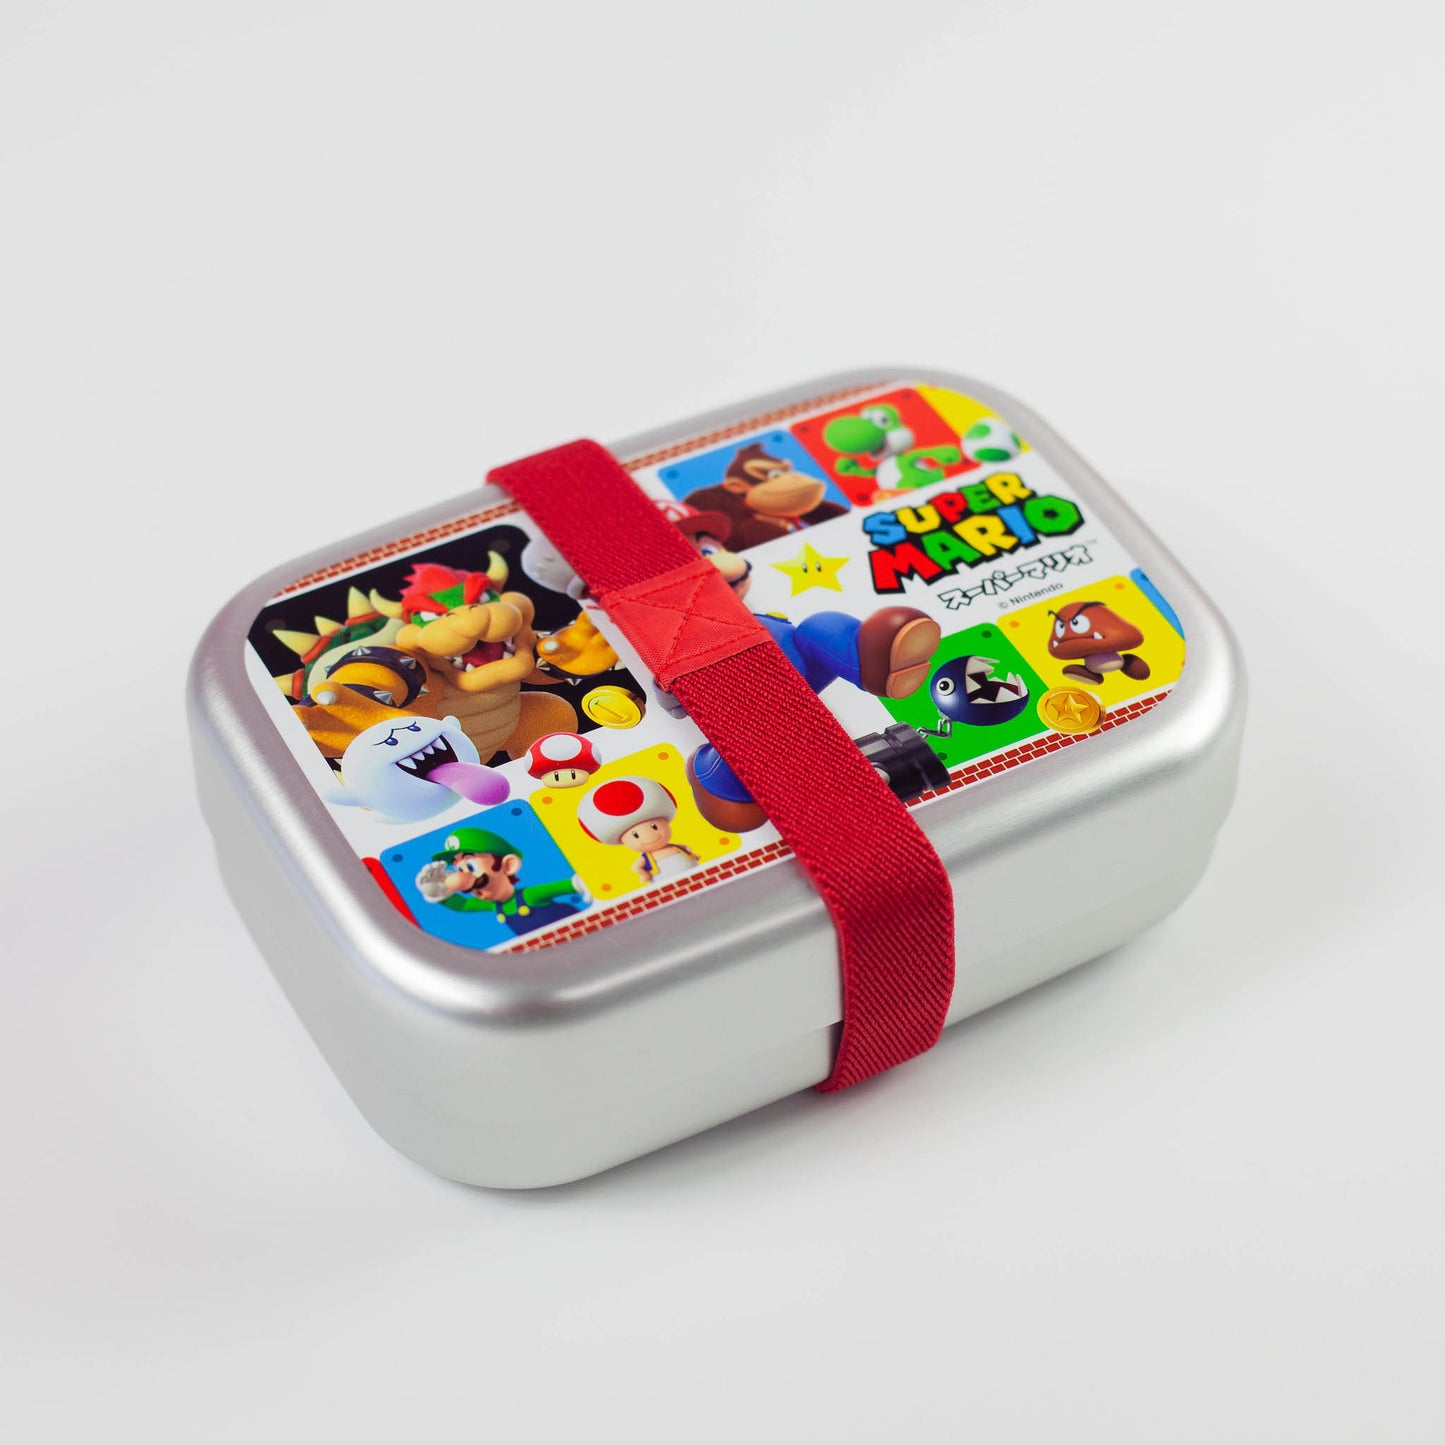 Skater Antibacterial Lunch Box For Children 360Ml Super Mario Boys Mad